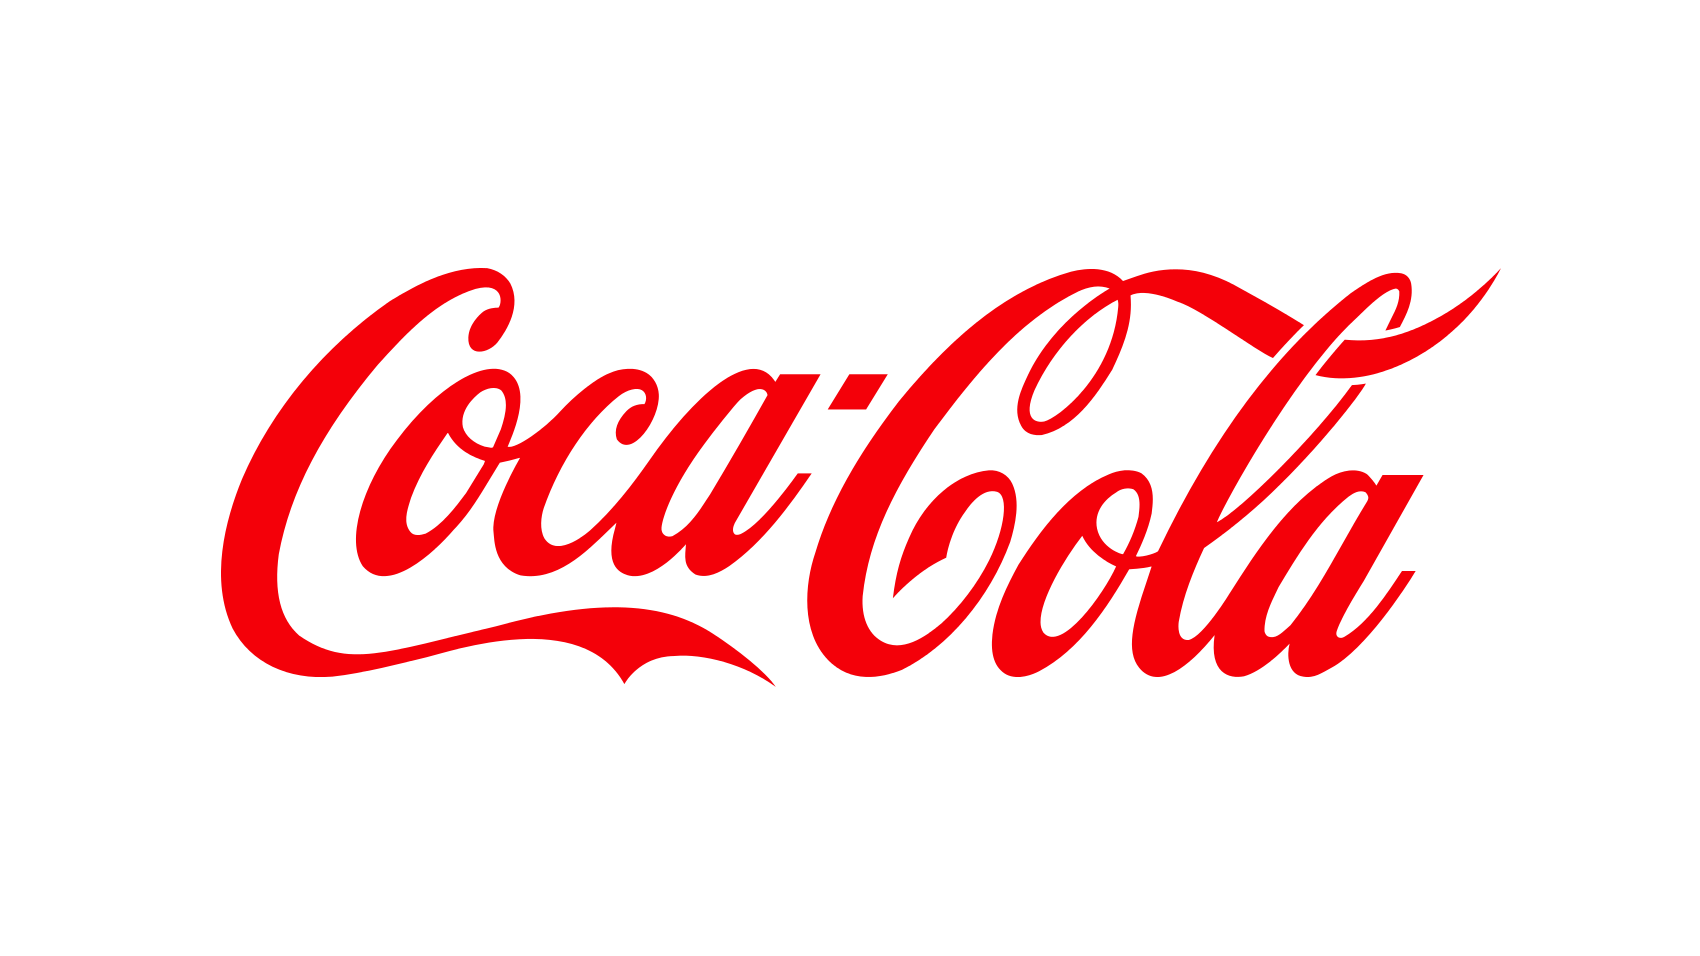 Coke II Logo - Coca-Cola logo | Dwglogo